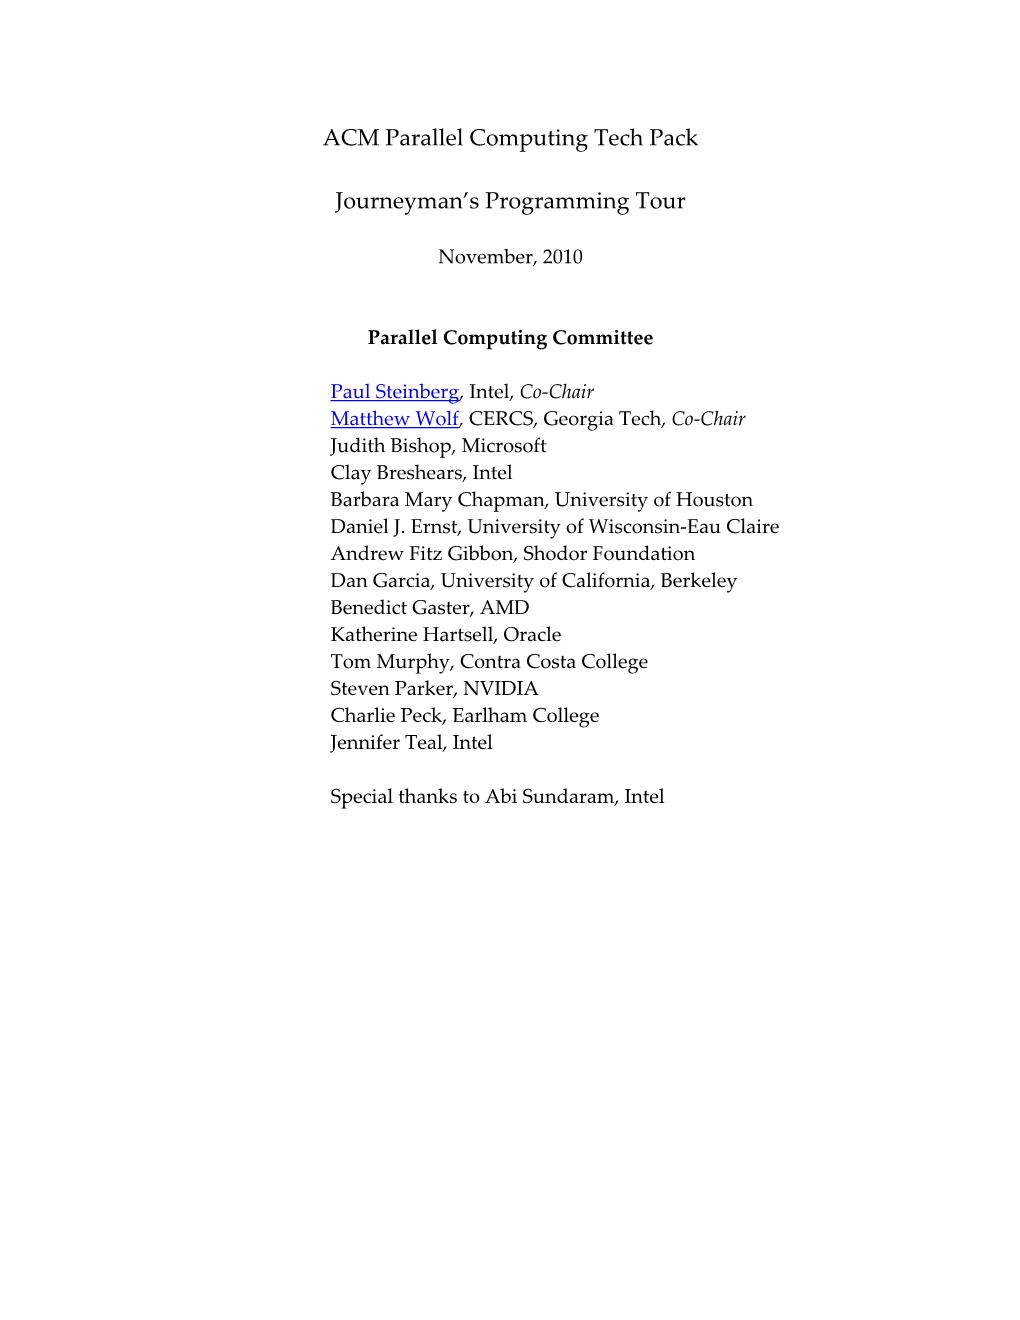 ACM Parallel Computing Tech Pack Journeyman's Programming Tour